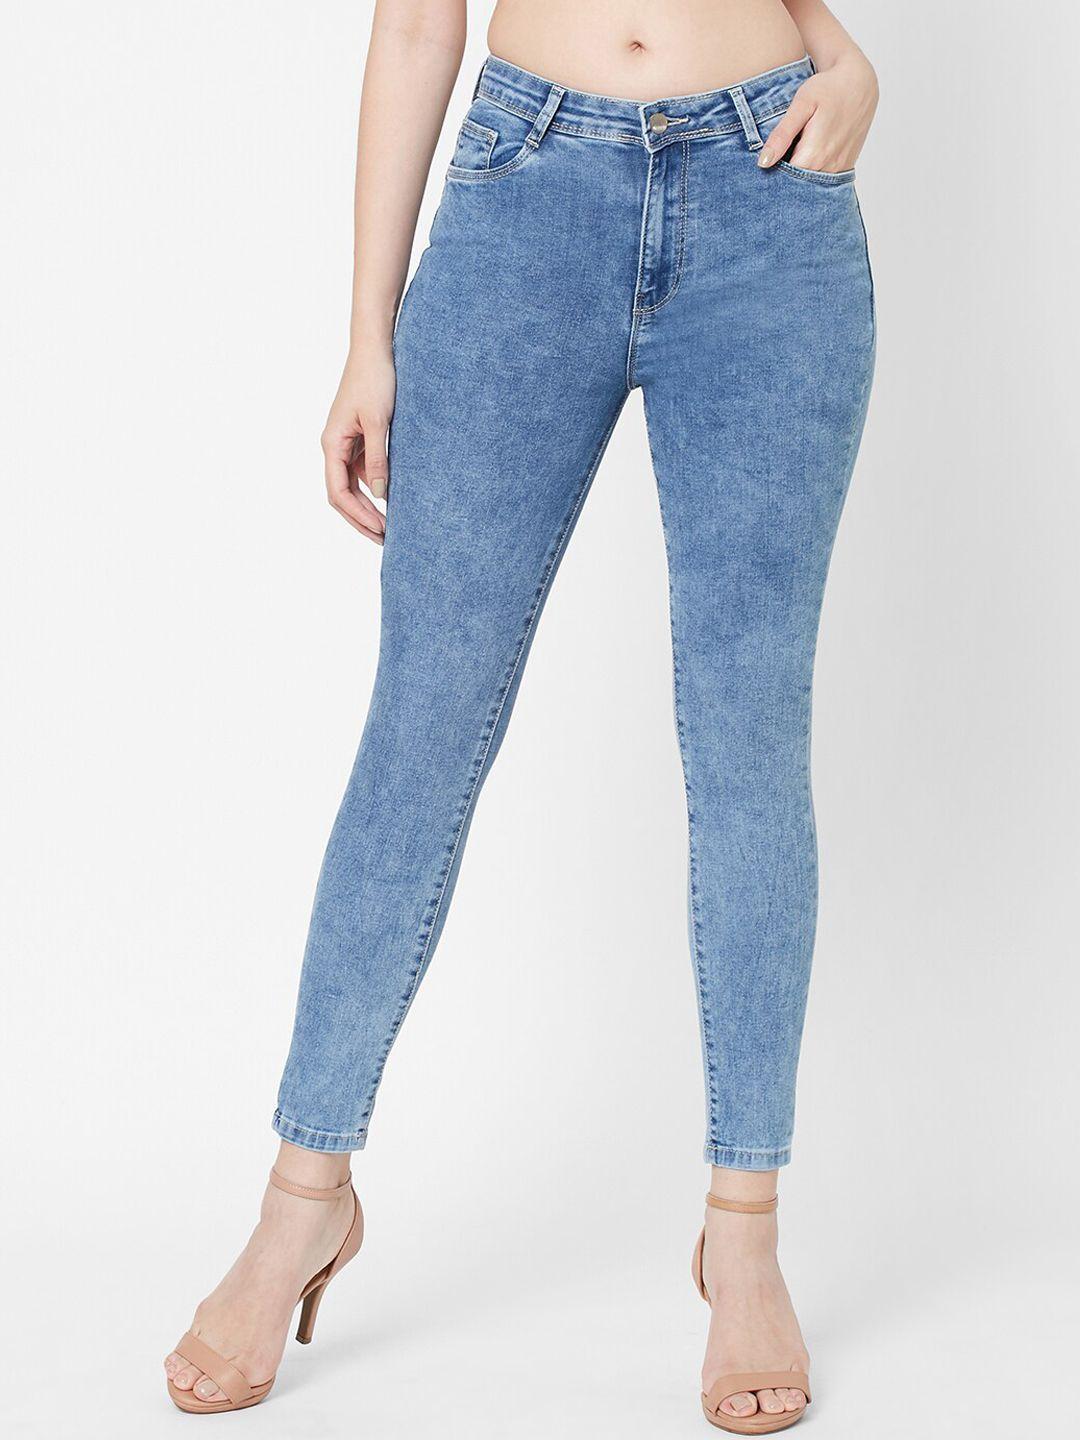 kraus jeans women super skinny fit mid-rise light fade jeans